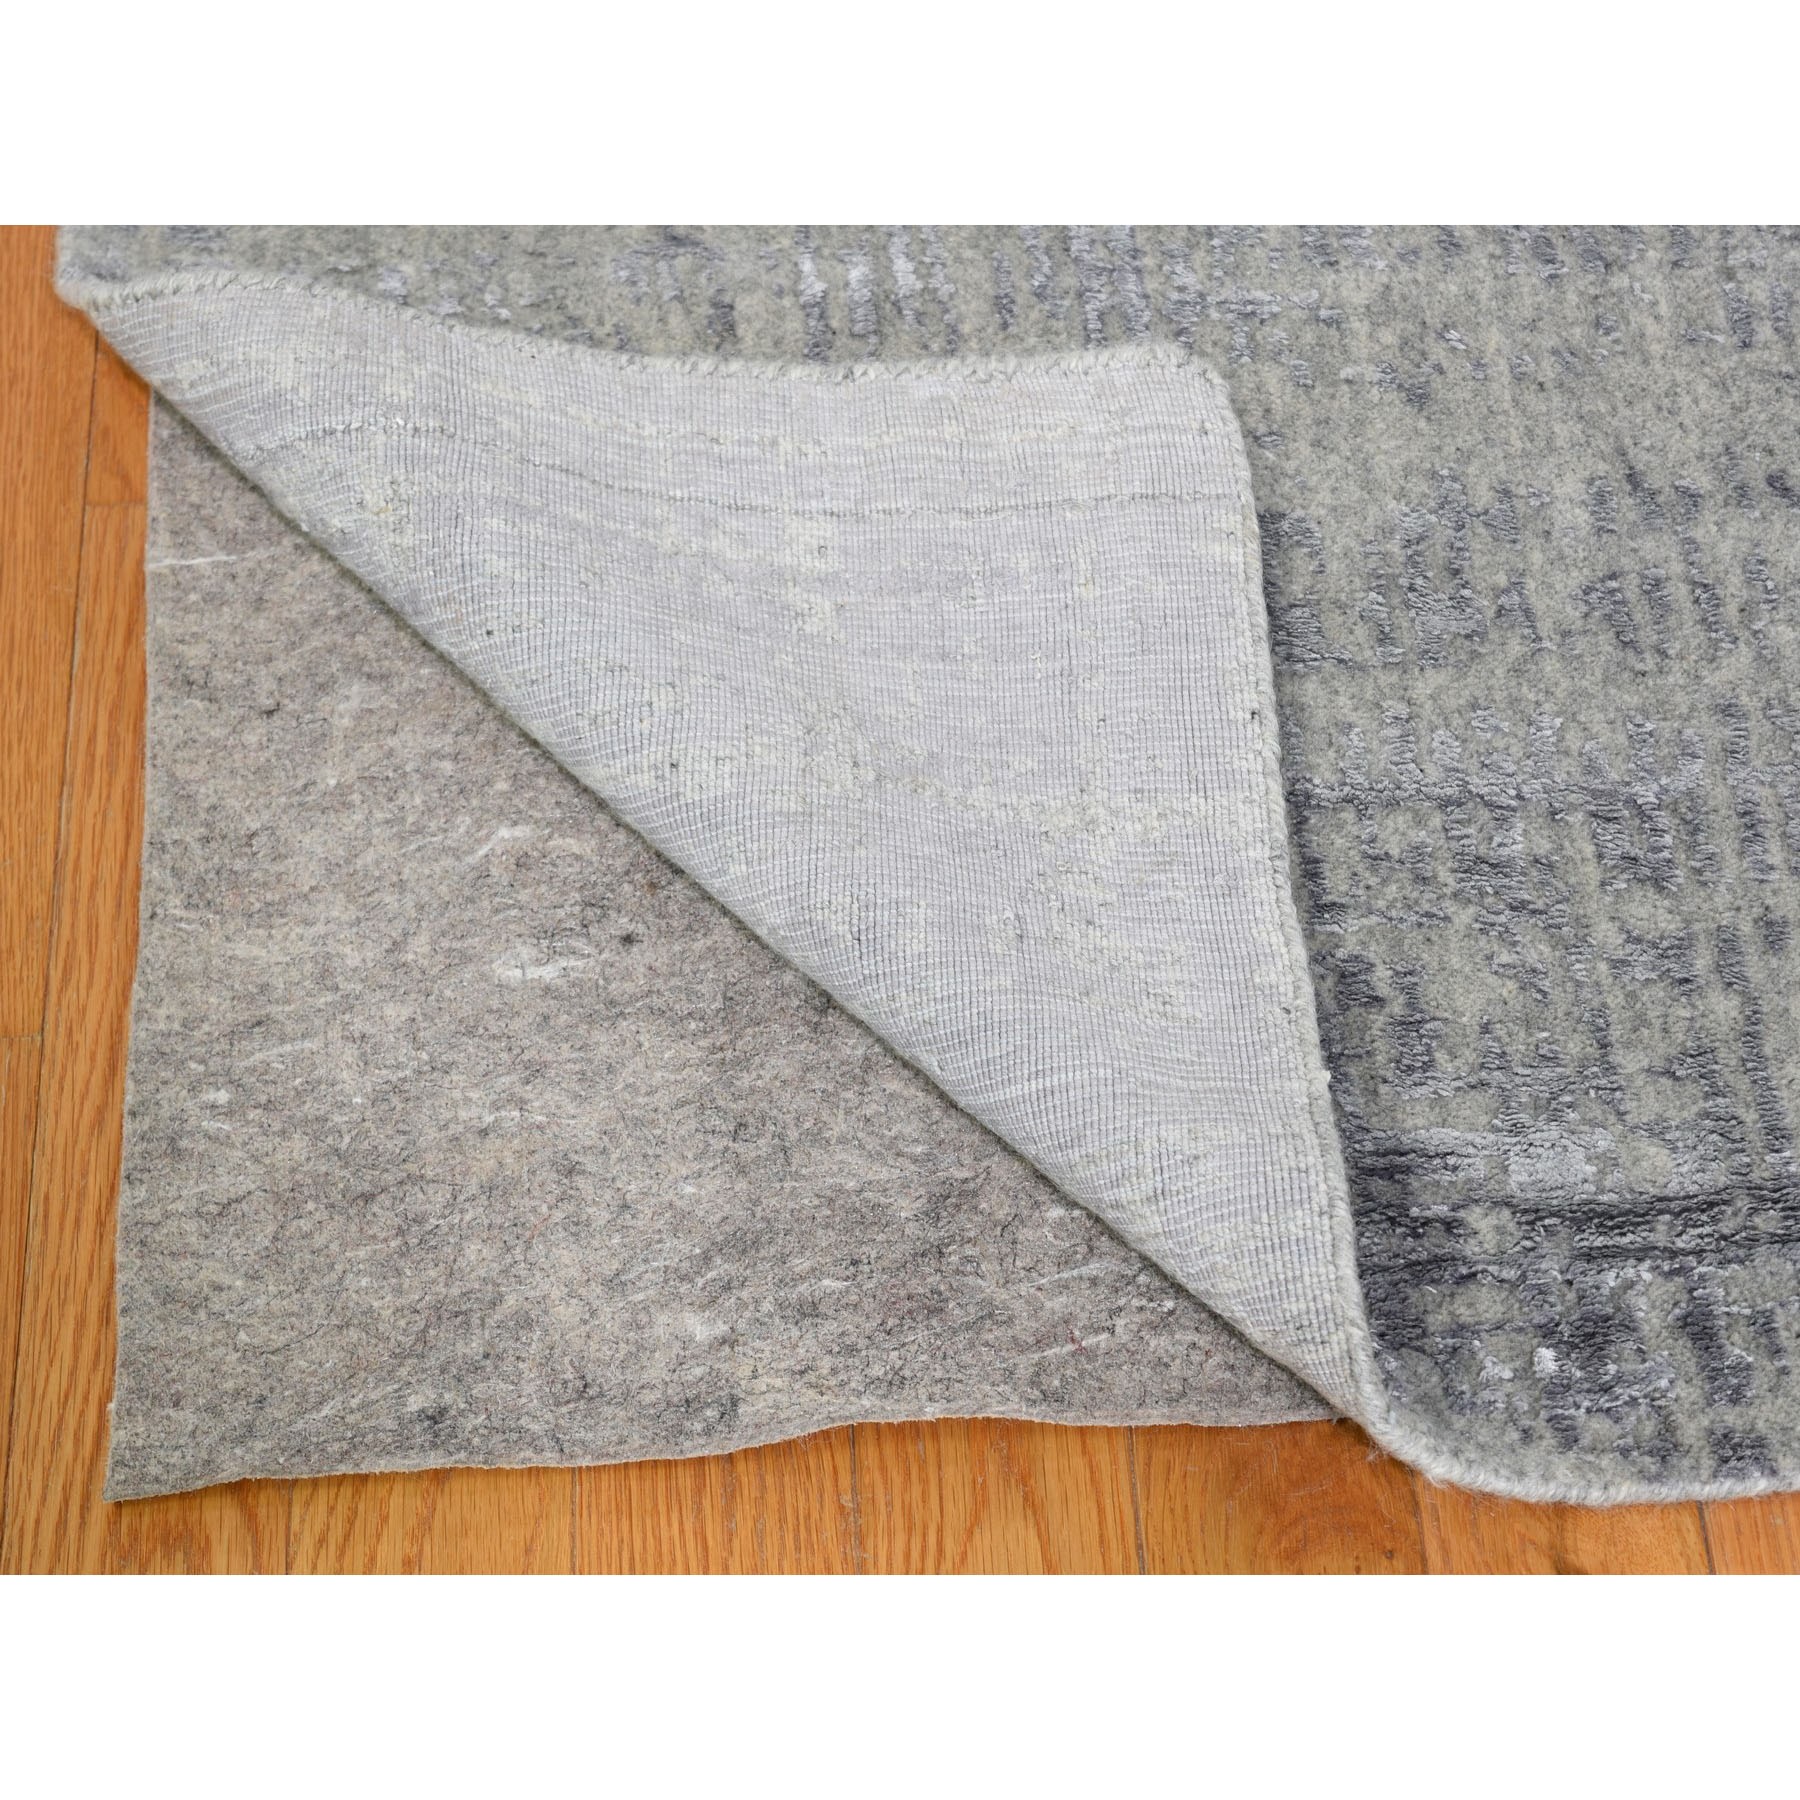 8-10 x12- Gray Fine jacquard Hand-Loomed Modern Wool And Silk Oriental Rug 